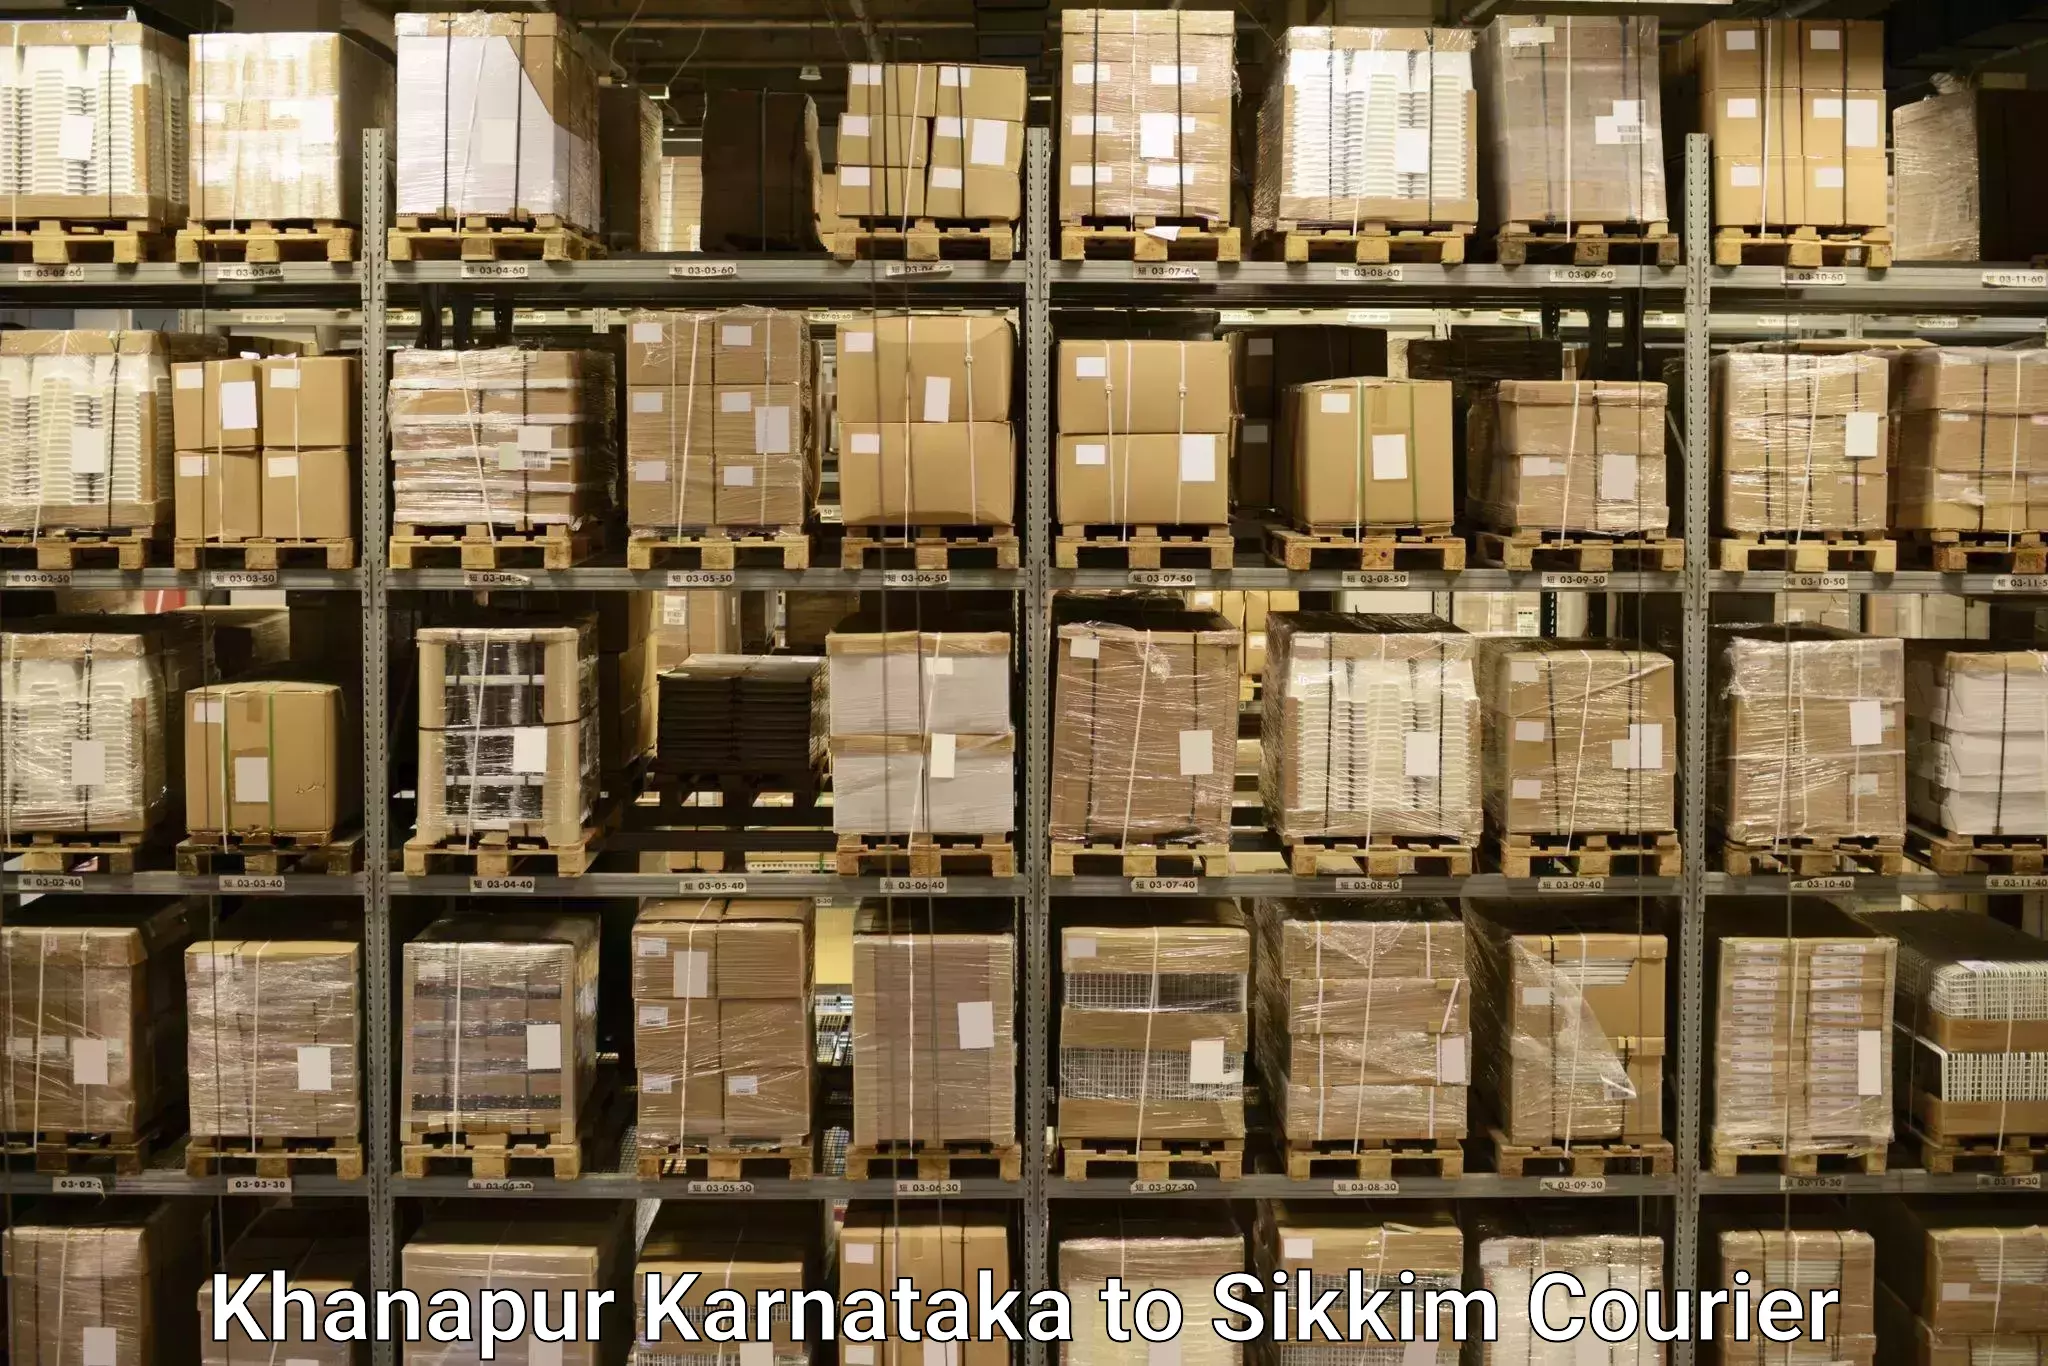 Emergency baggage service Khanapur Karnataka to Pelling